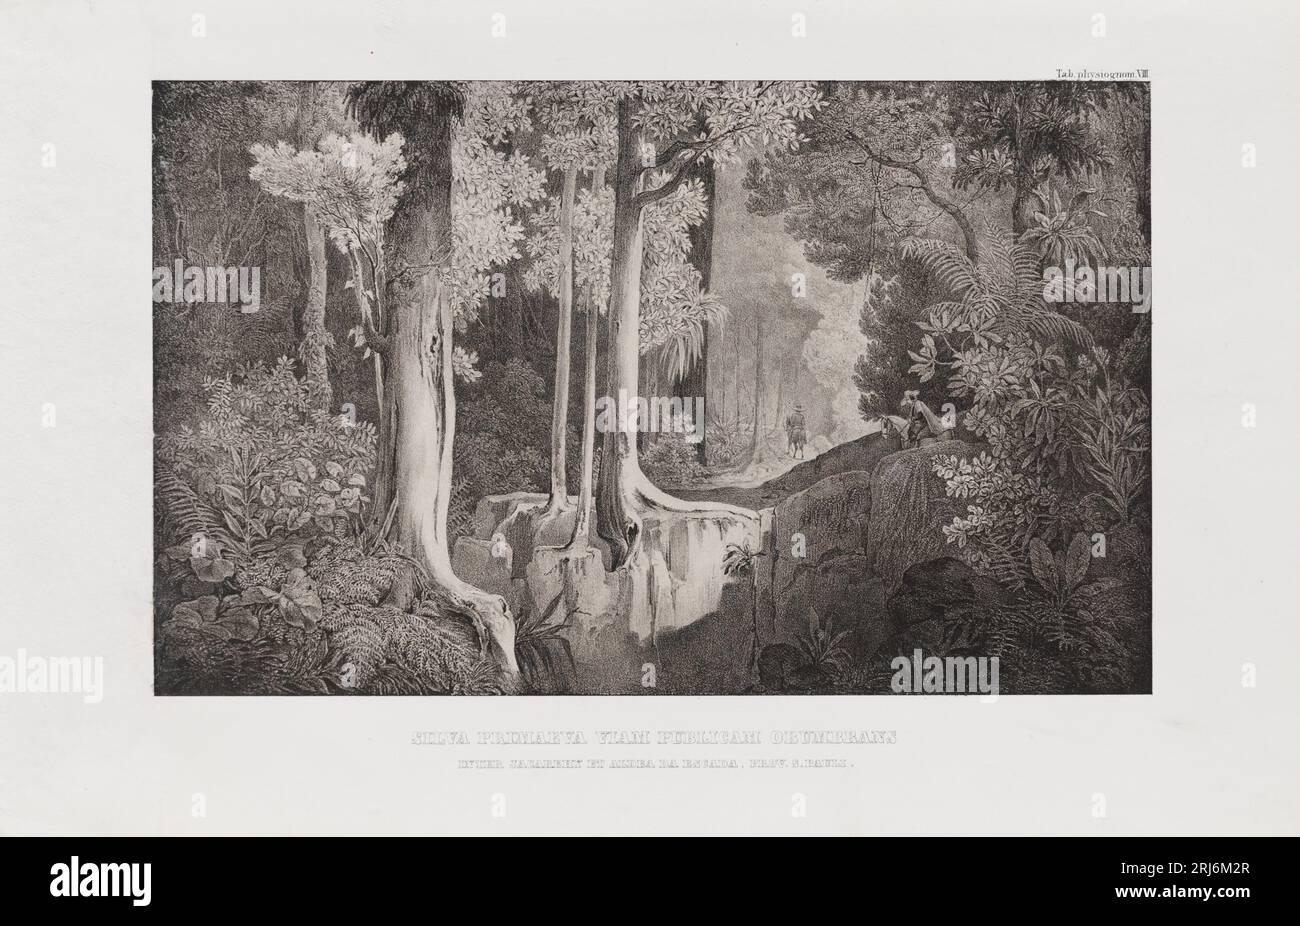 Silva primaeva viam publicam obumbrans inter Jacarehy et aldea da escada, prov. S. Pauli 1850 by Carl Friedrich Philipp von Martius Stock Photo